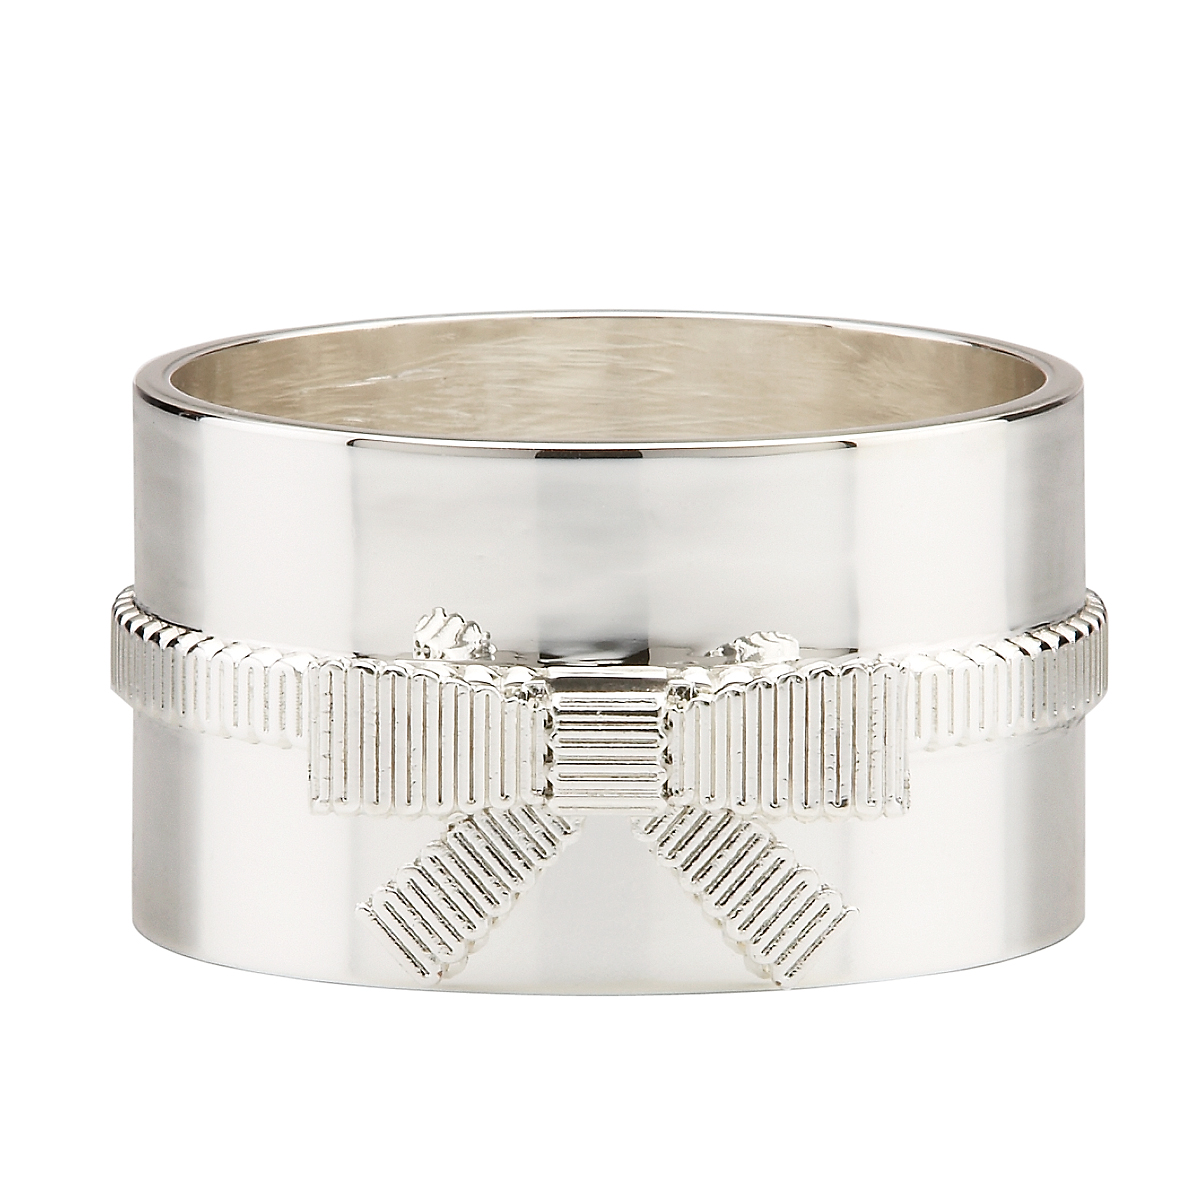 Kate Spade New York, Lenox Grace Avenue Napkin Ring, Set of 4